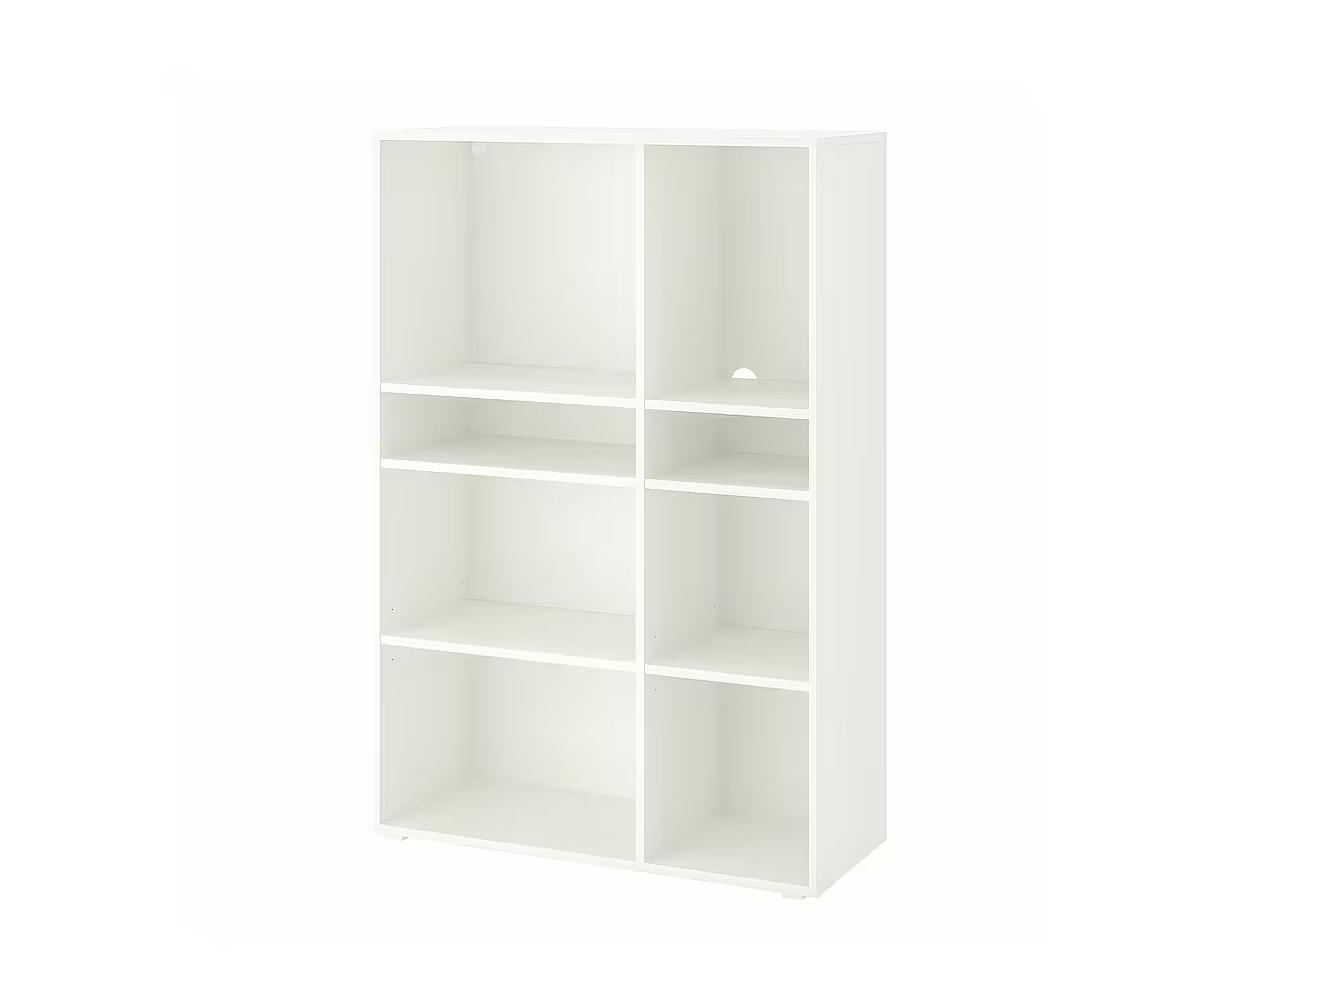 Изображение товара Стеллаж Вихалс 3 white ИКЕА (IKEA), 95x37x140 см на сайте adeta.ru